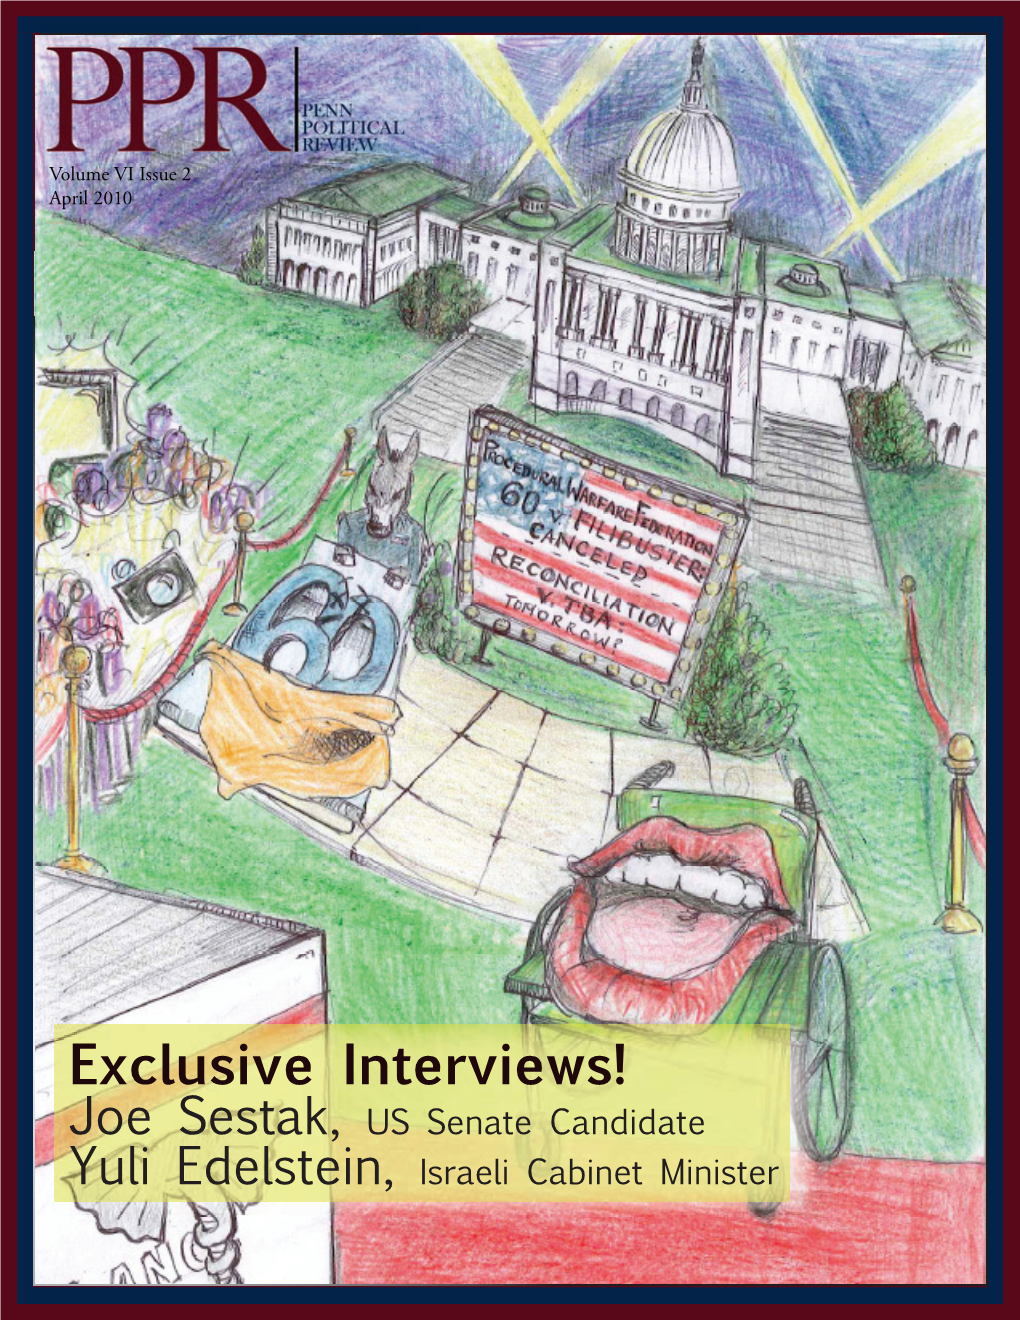 Exclusive Interviews! ʬˑˇʵˇ˕˖˃ˍʏʷʵʵˇː˃˖ˇʥ˃ːˆˋˆ˃˖ˇ ʻ˗ˎˋʧˆˇˎ˕˖ˇˋːʏʫ˕˔˃ˇˎˋʥ˃˄ˋːˇ˖ʯˋːˋ˕˖ˇ˔ President George W